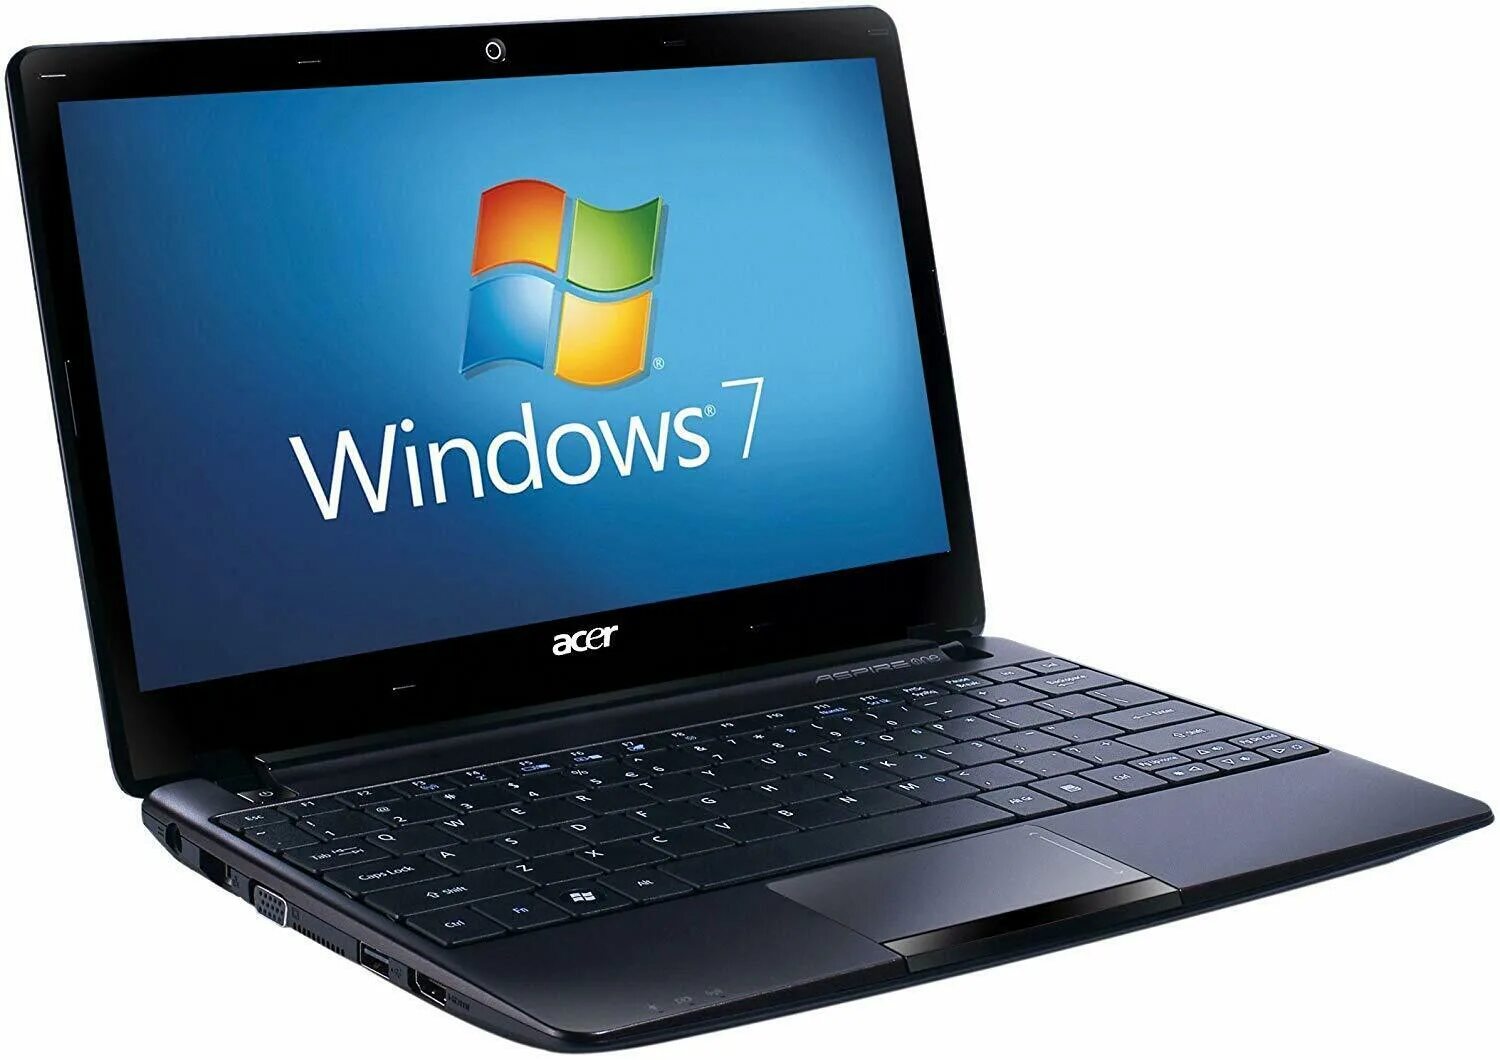 Ноутбук emachines pav70. Acer Aspire one d255. Aspire one d257-13dqkk. Ноутбук Acer Aspire one aod257-n57dqkk.